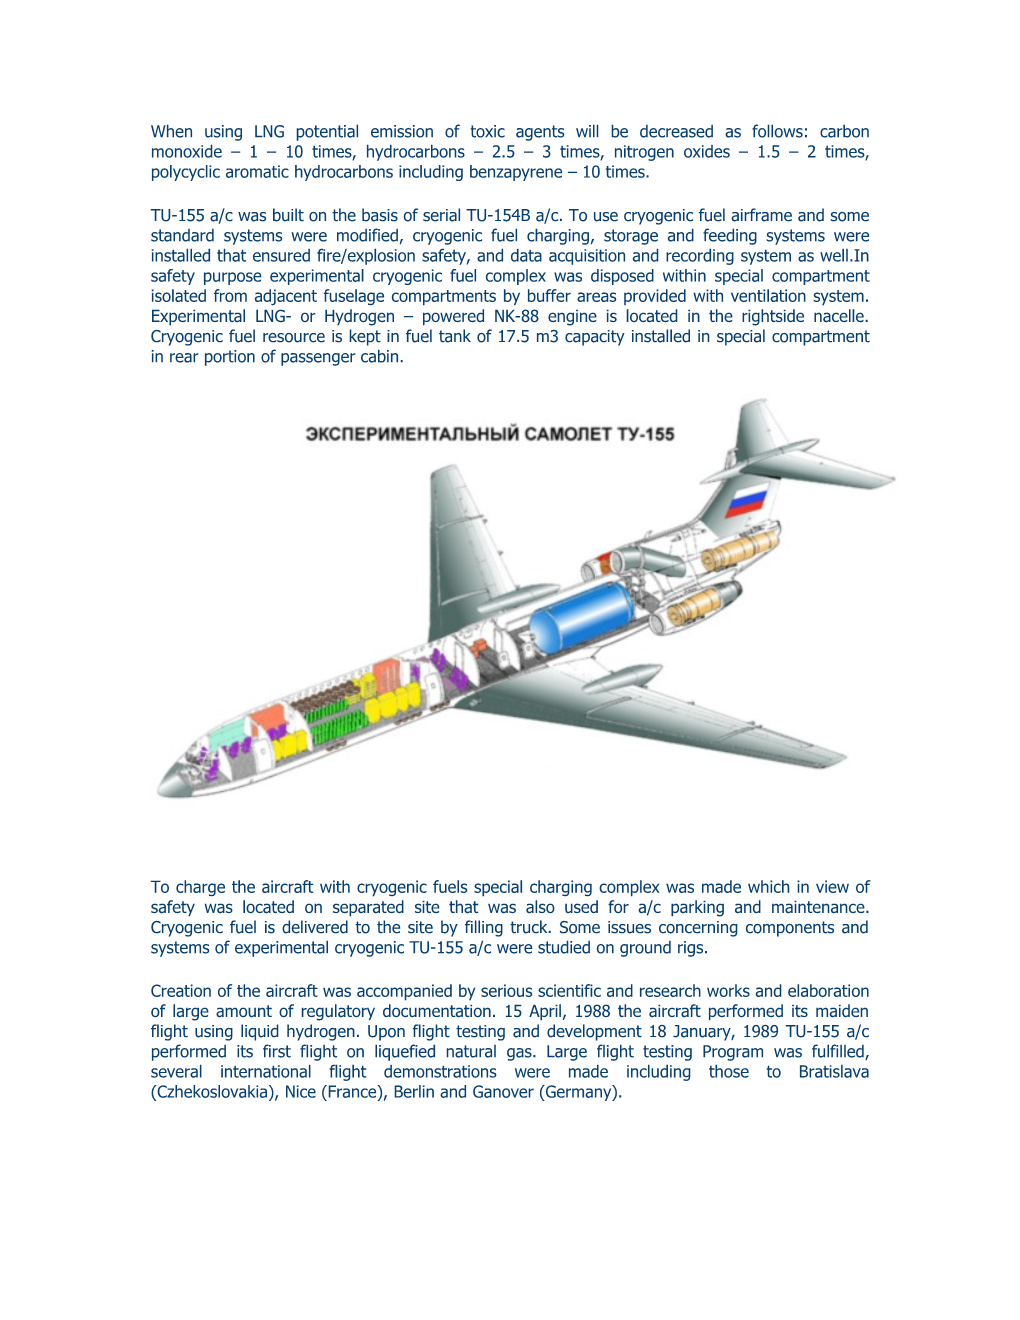 Development of Cryogenic Fuel Aircraft